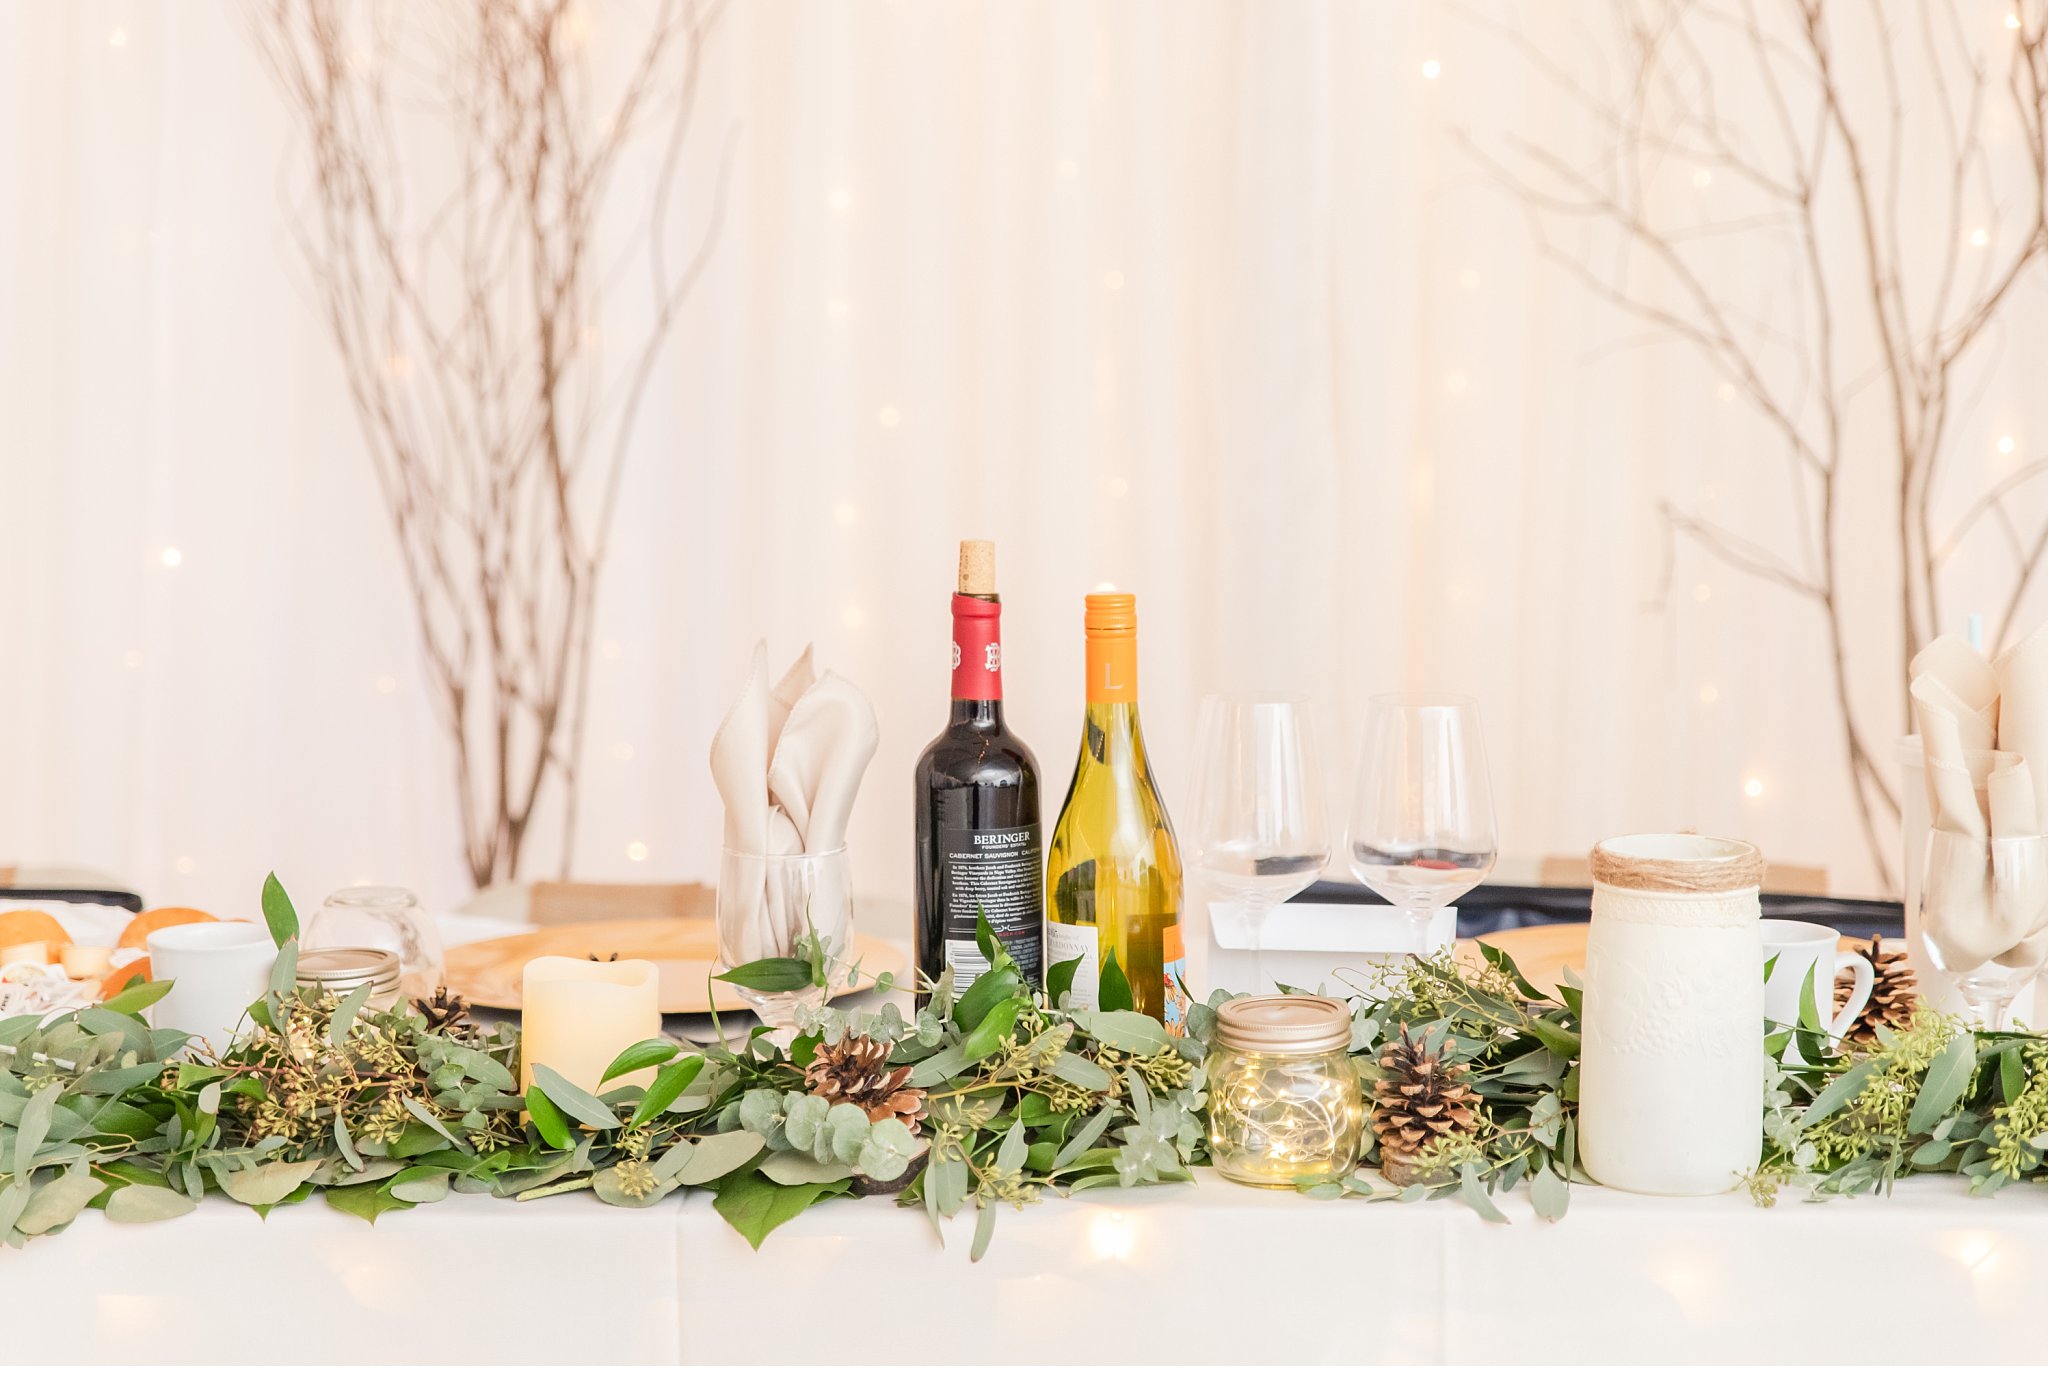 wine bottles and greenery wedding decor